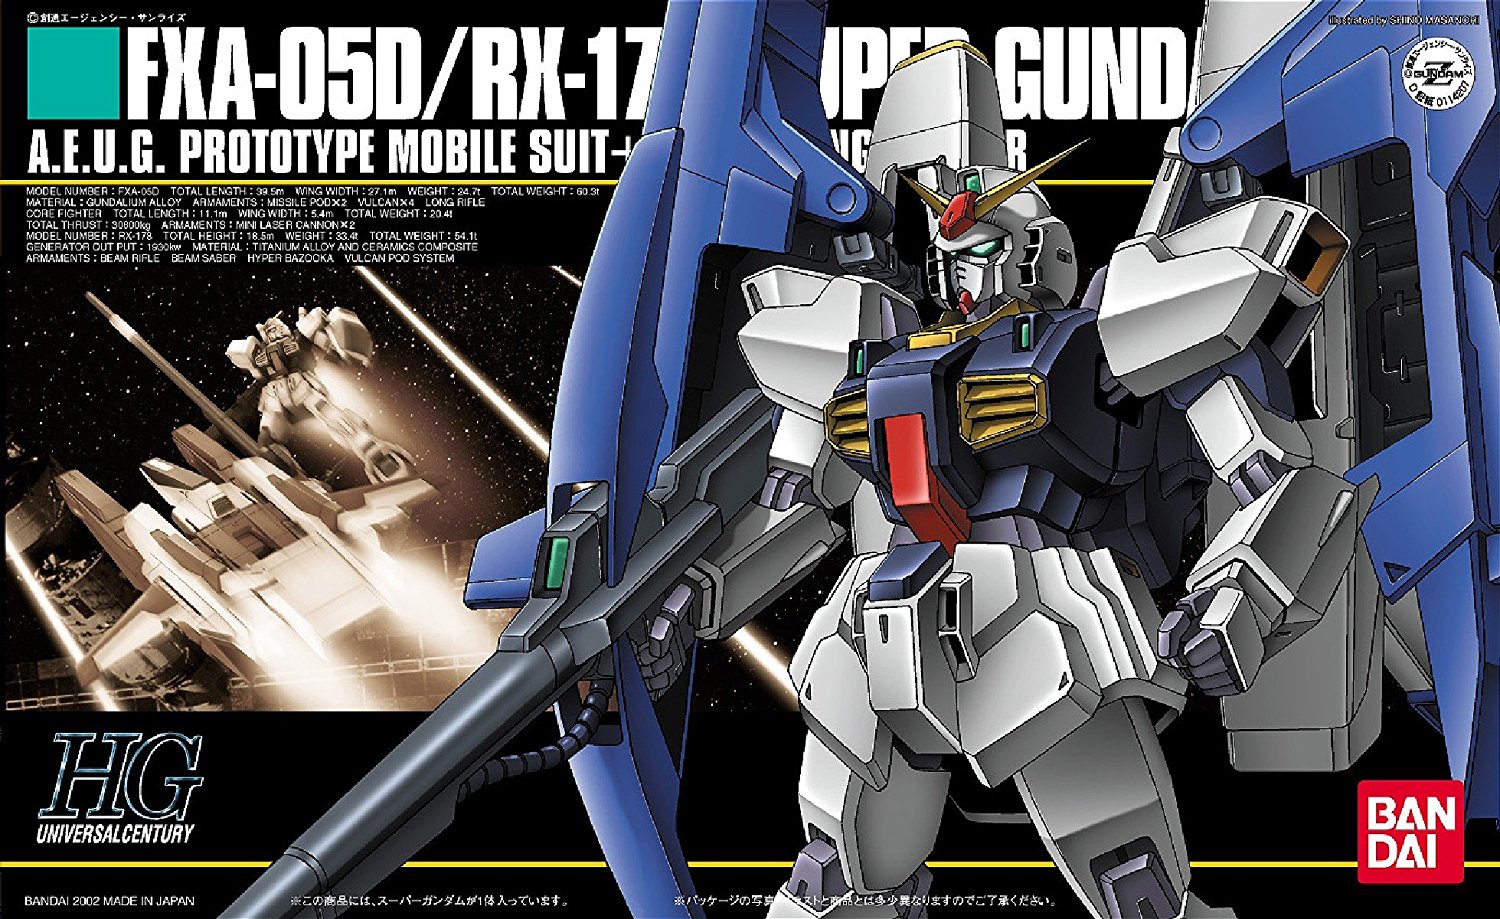 Hguc 1/144 #35 Super Gundam Model kit